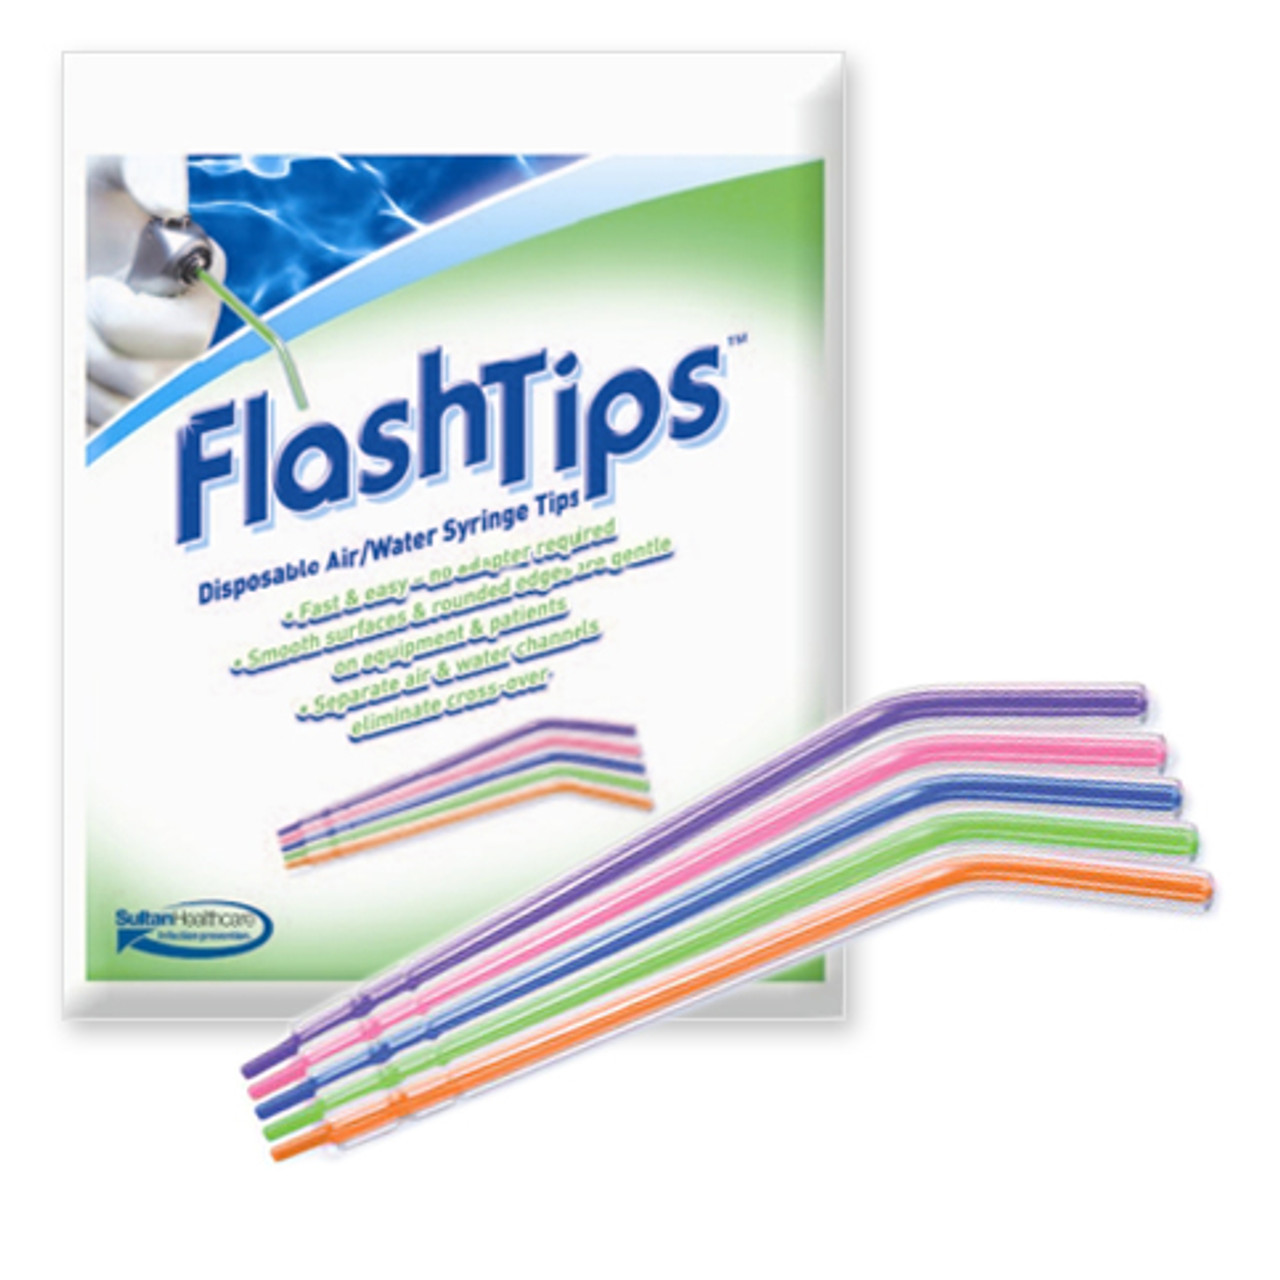 Sultan Flashtips Disposable Air/Water Syringe Tips 250/bg